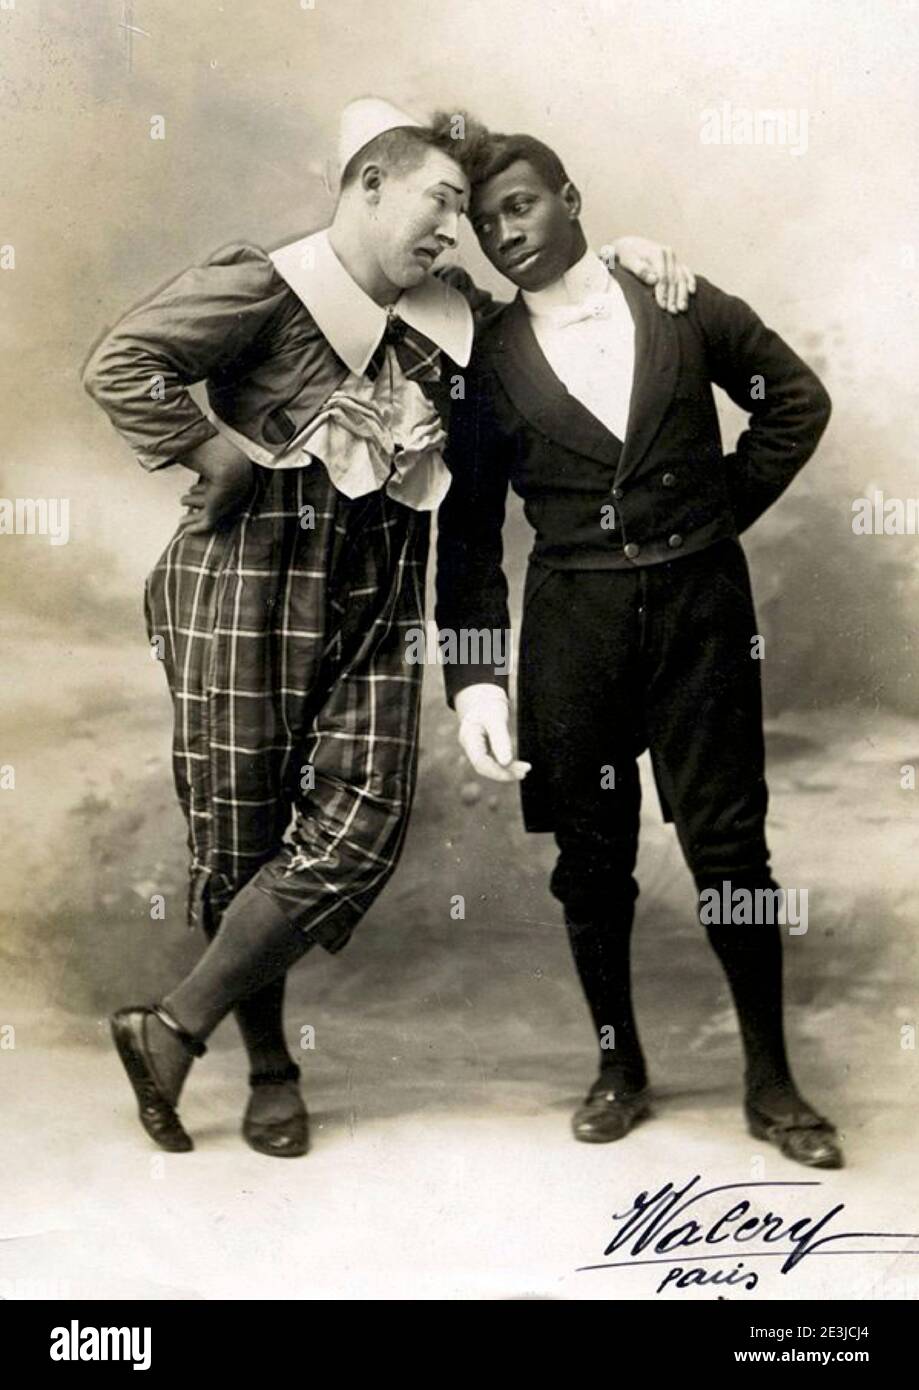 Foottit und Chocolat - Vintage Clown Doppelakt. Stockfoto